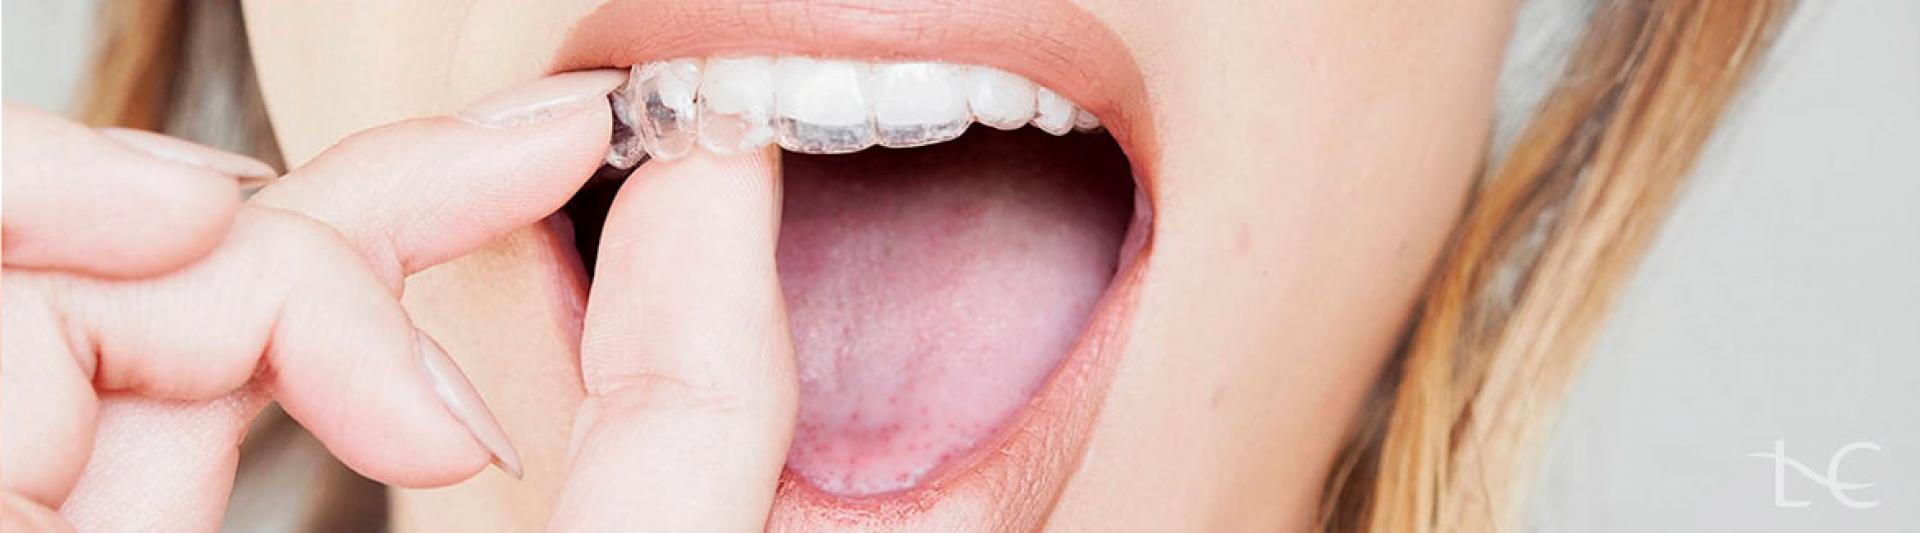 Invisalign: quanto custa o tratamento e como funciona? - Ortodontia Curitiba